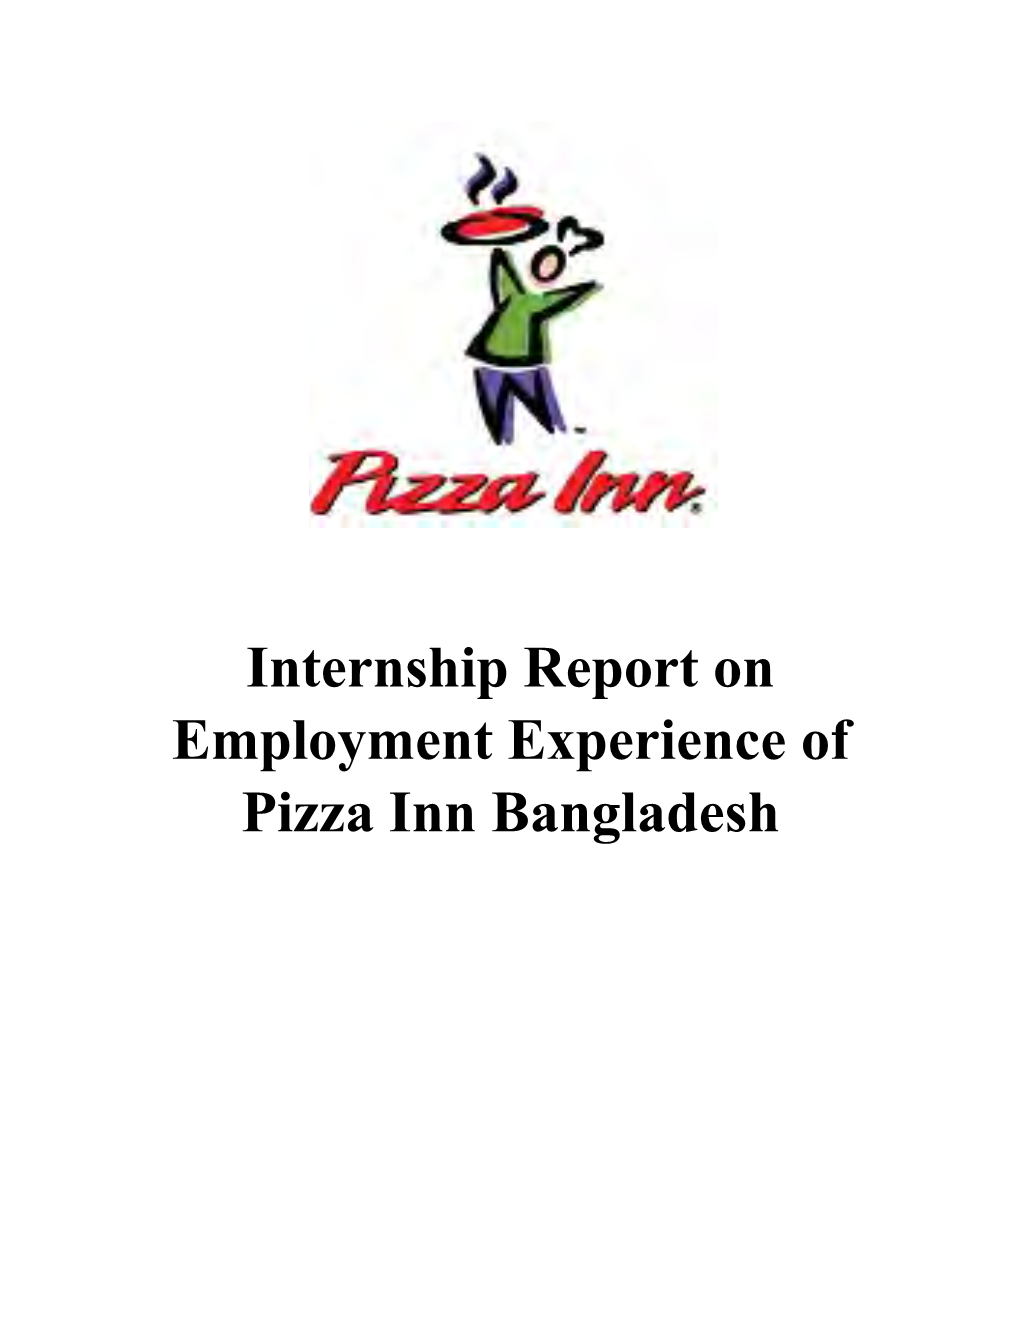 Internship Report on Employment Experience of Pizza Inn Bangladesh